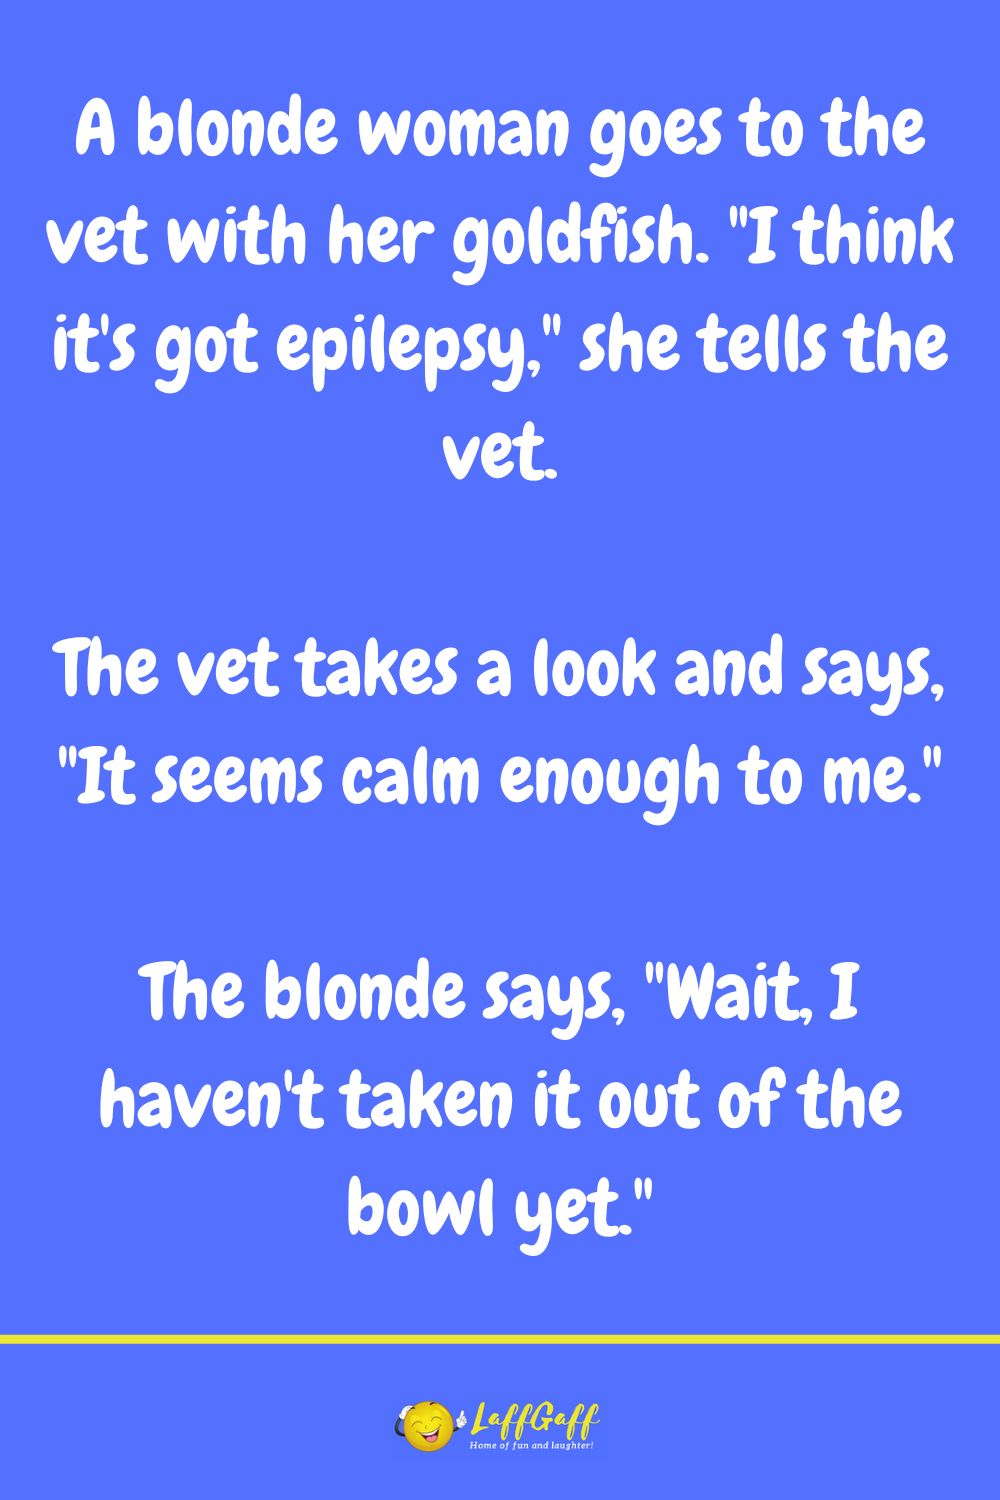 Epileptic goldfish joke from LaffGaff.